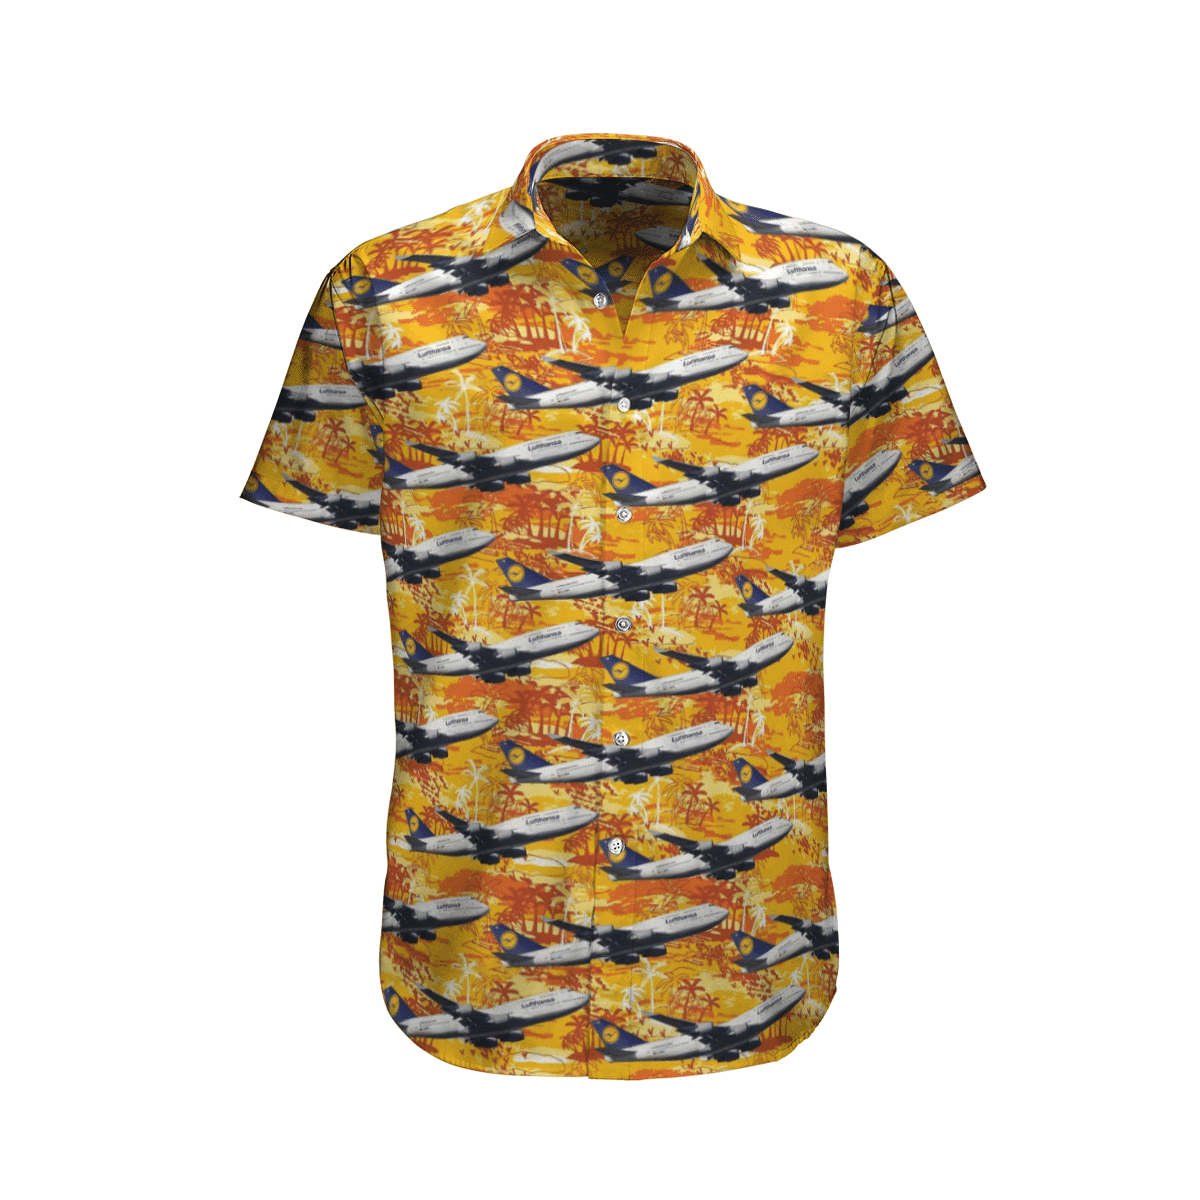 Get a new Hawaiian shirt to enjoy summer vacation 70